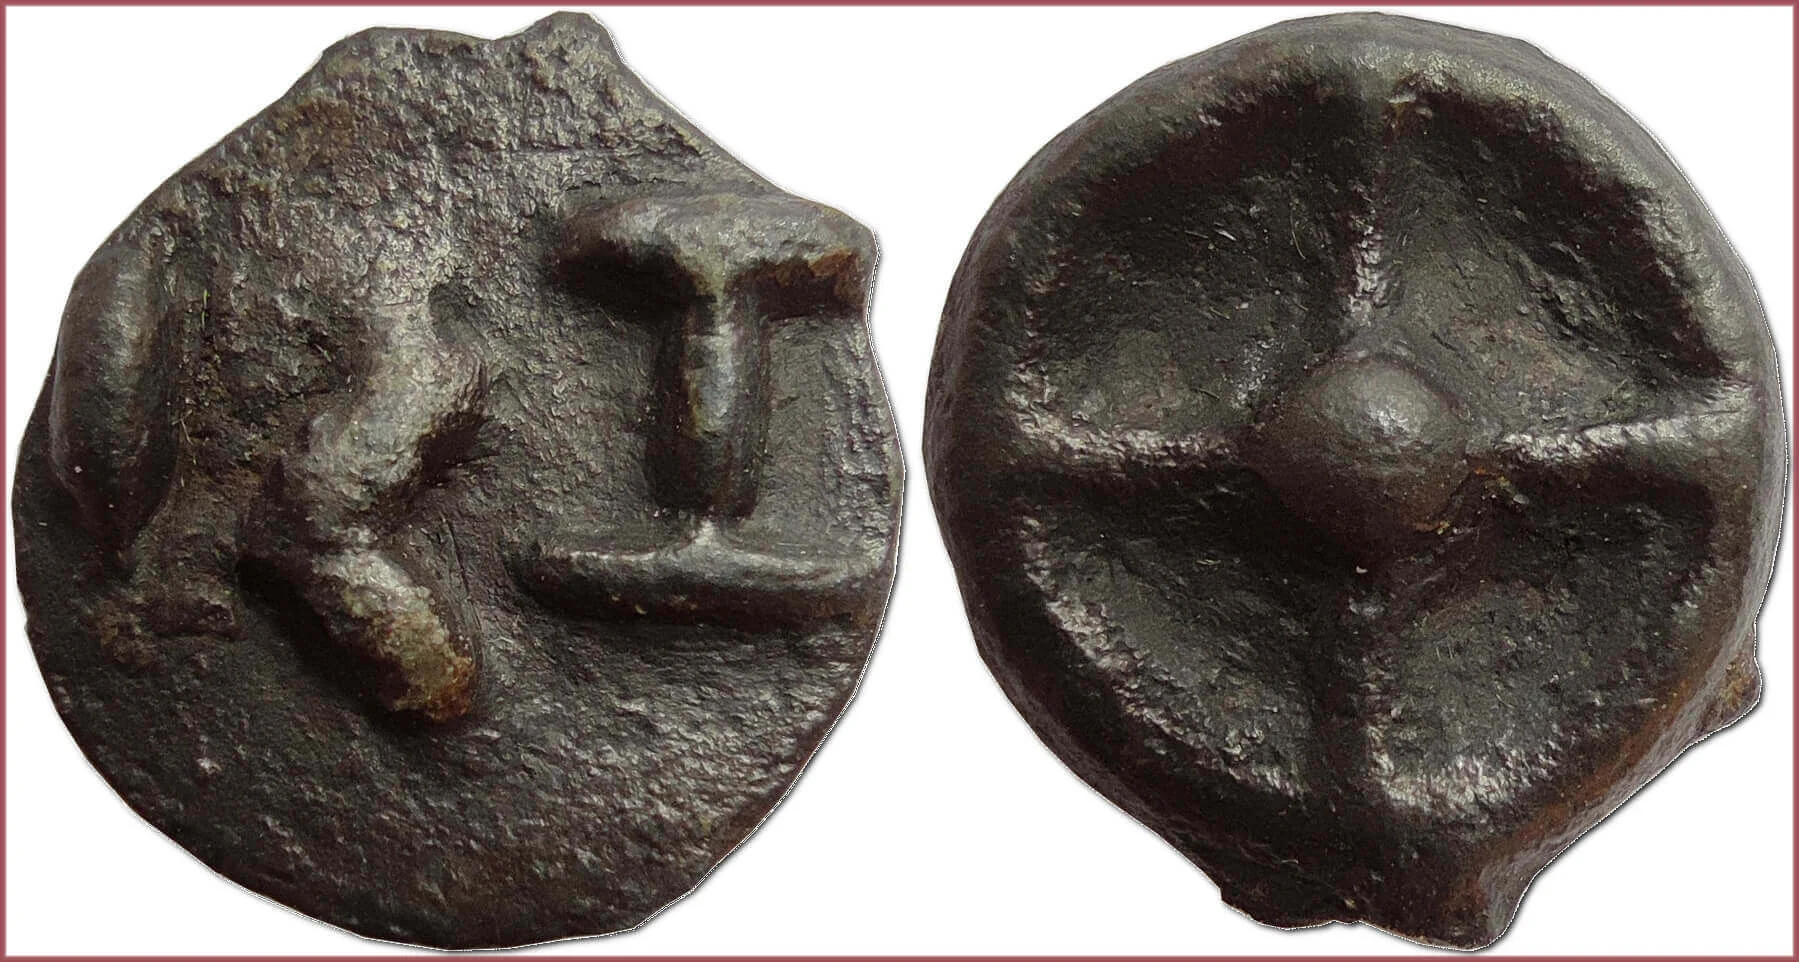 Wheel money /Wheel coin/, 500-400 BC: ancient city Istros